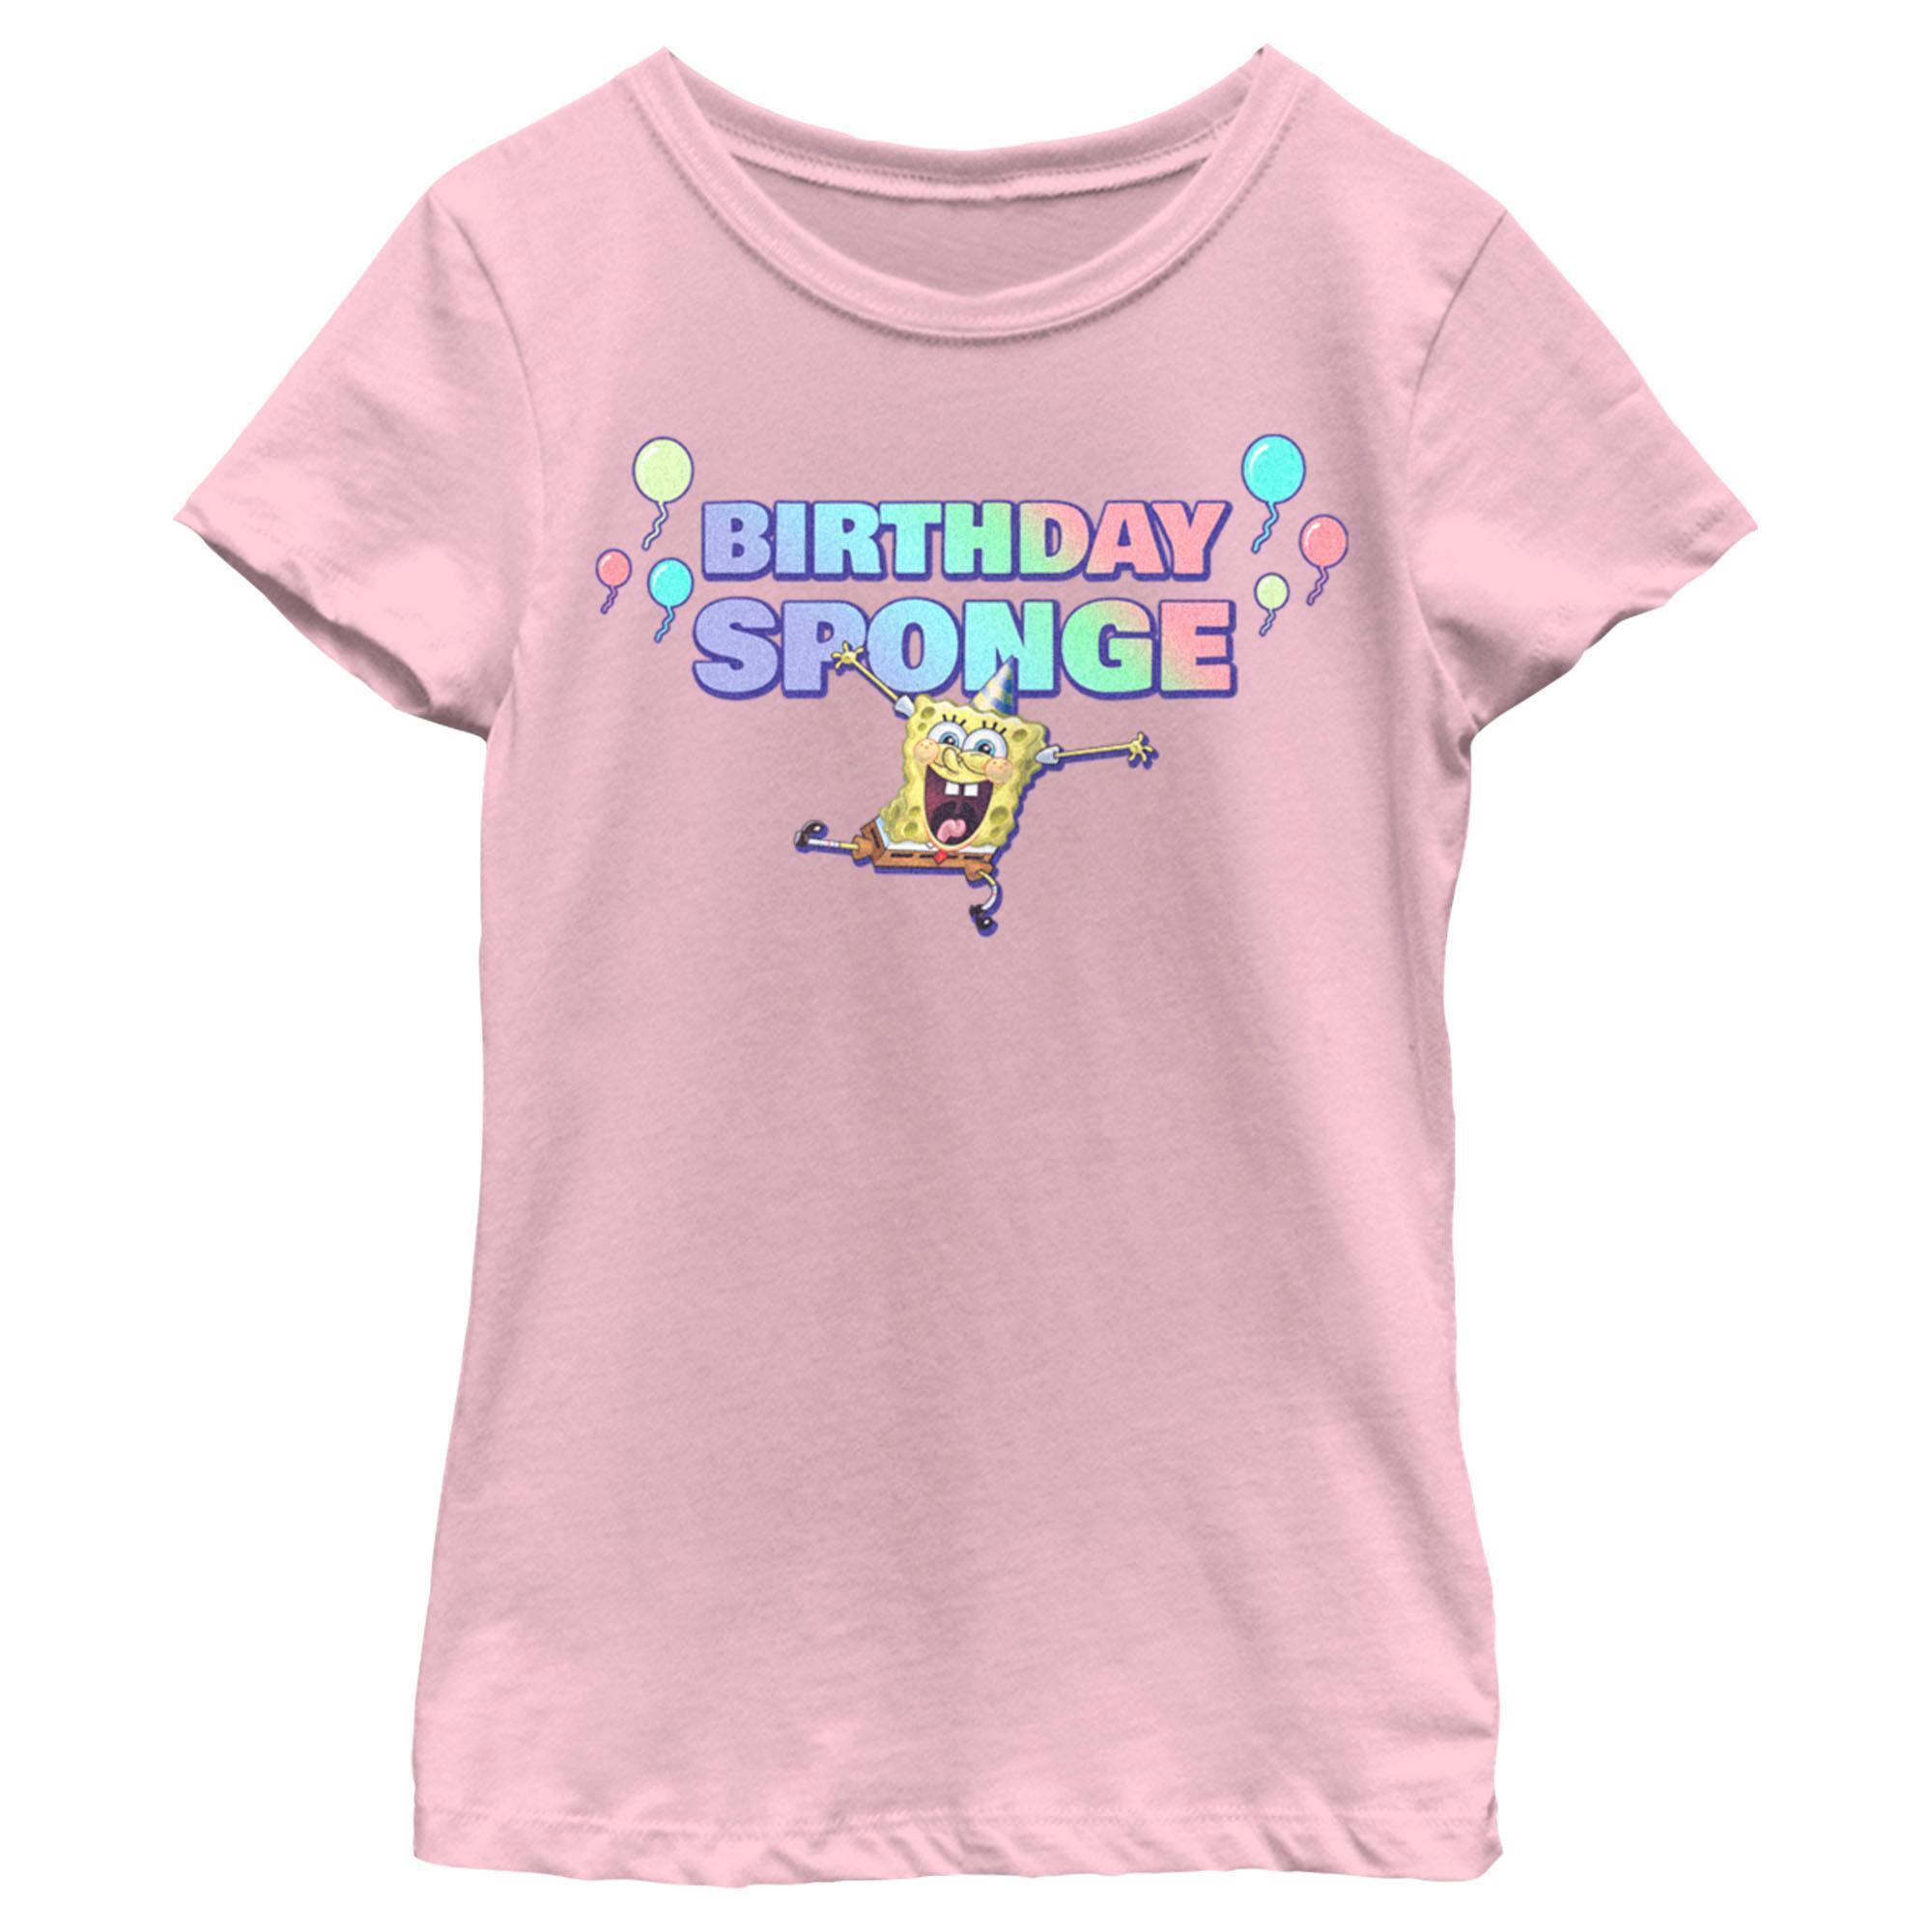 Girl's SpongeBob SquarePants Birthday Sponge Graphic T-Shirt